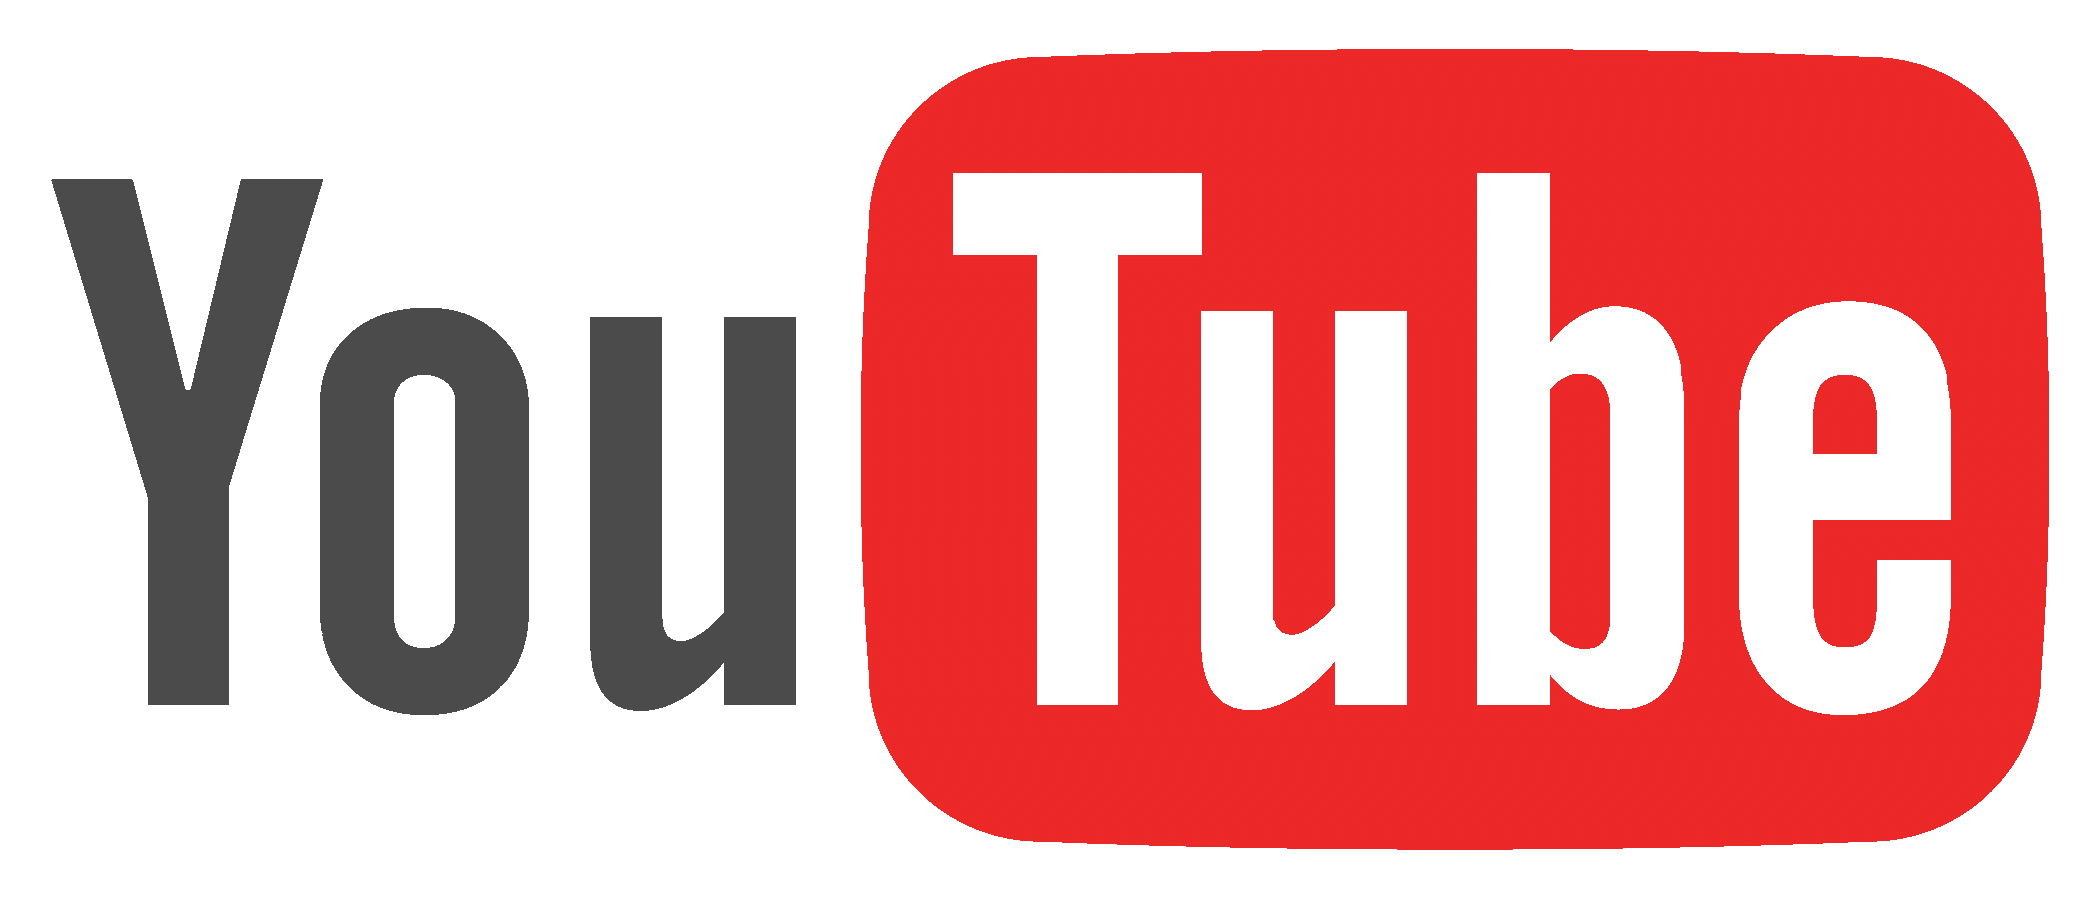 youtube-logo-wb